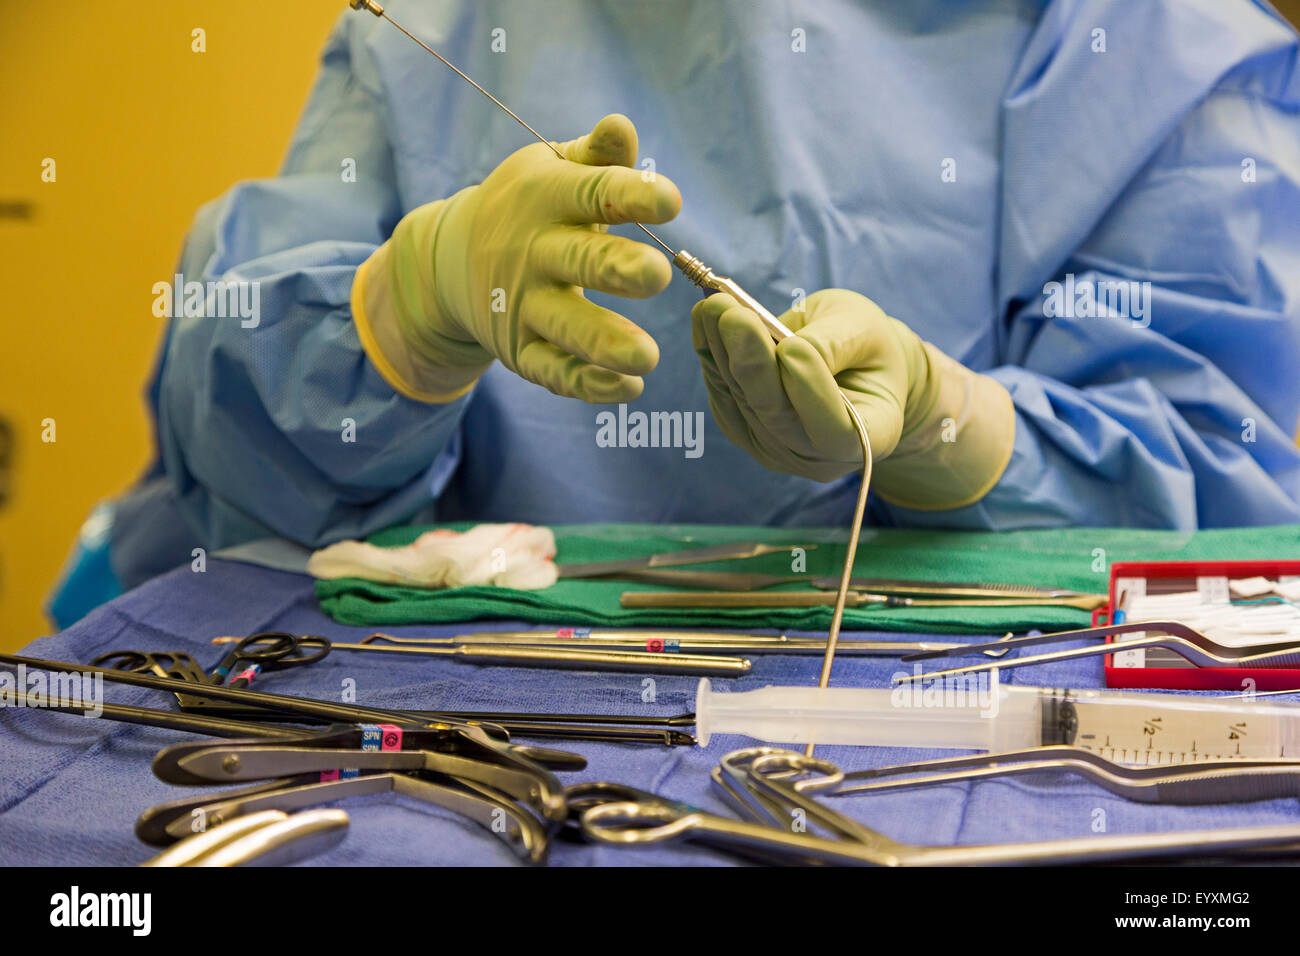 Englewood, Colorado - A nurse prepares tools during lumbar spine surgery at Swedish Medical Center. Stock Photo